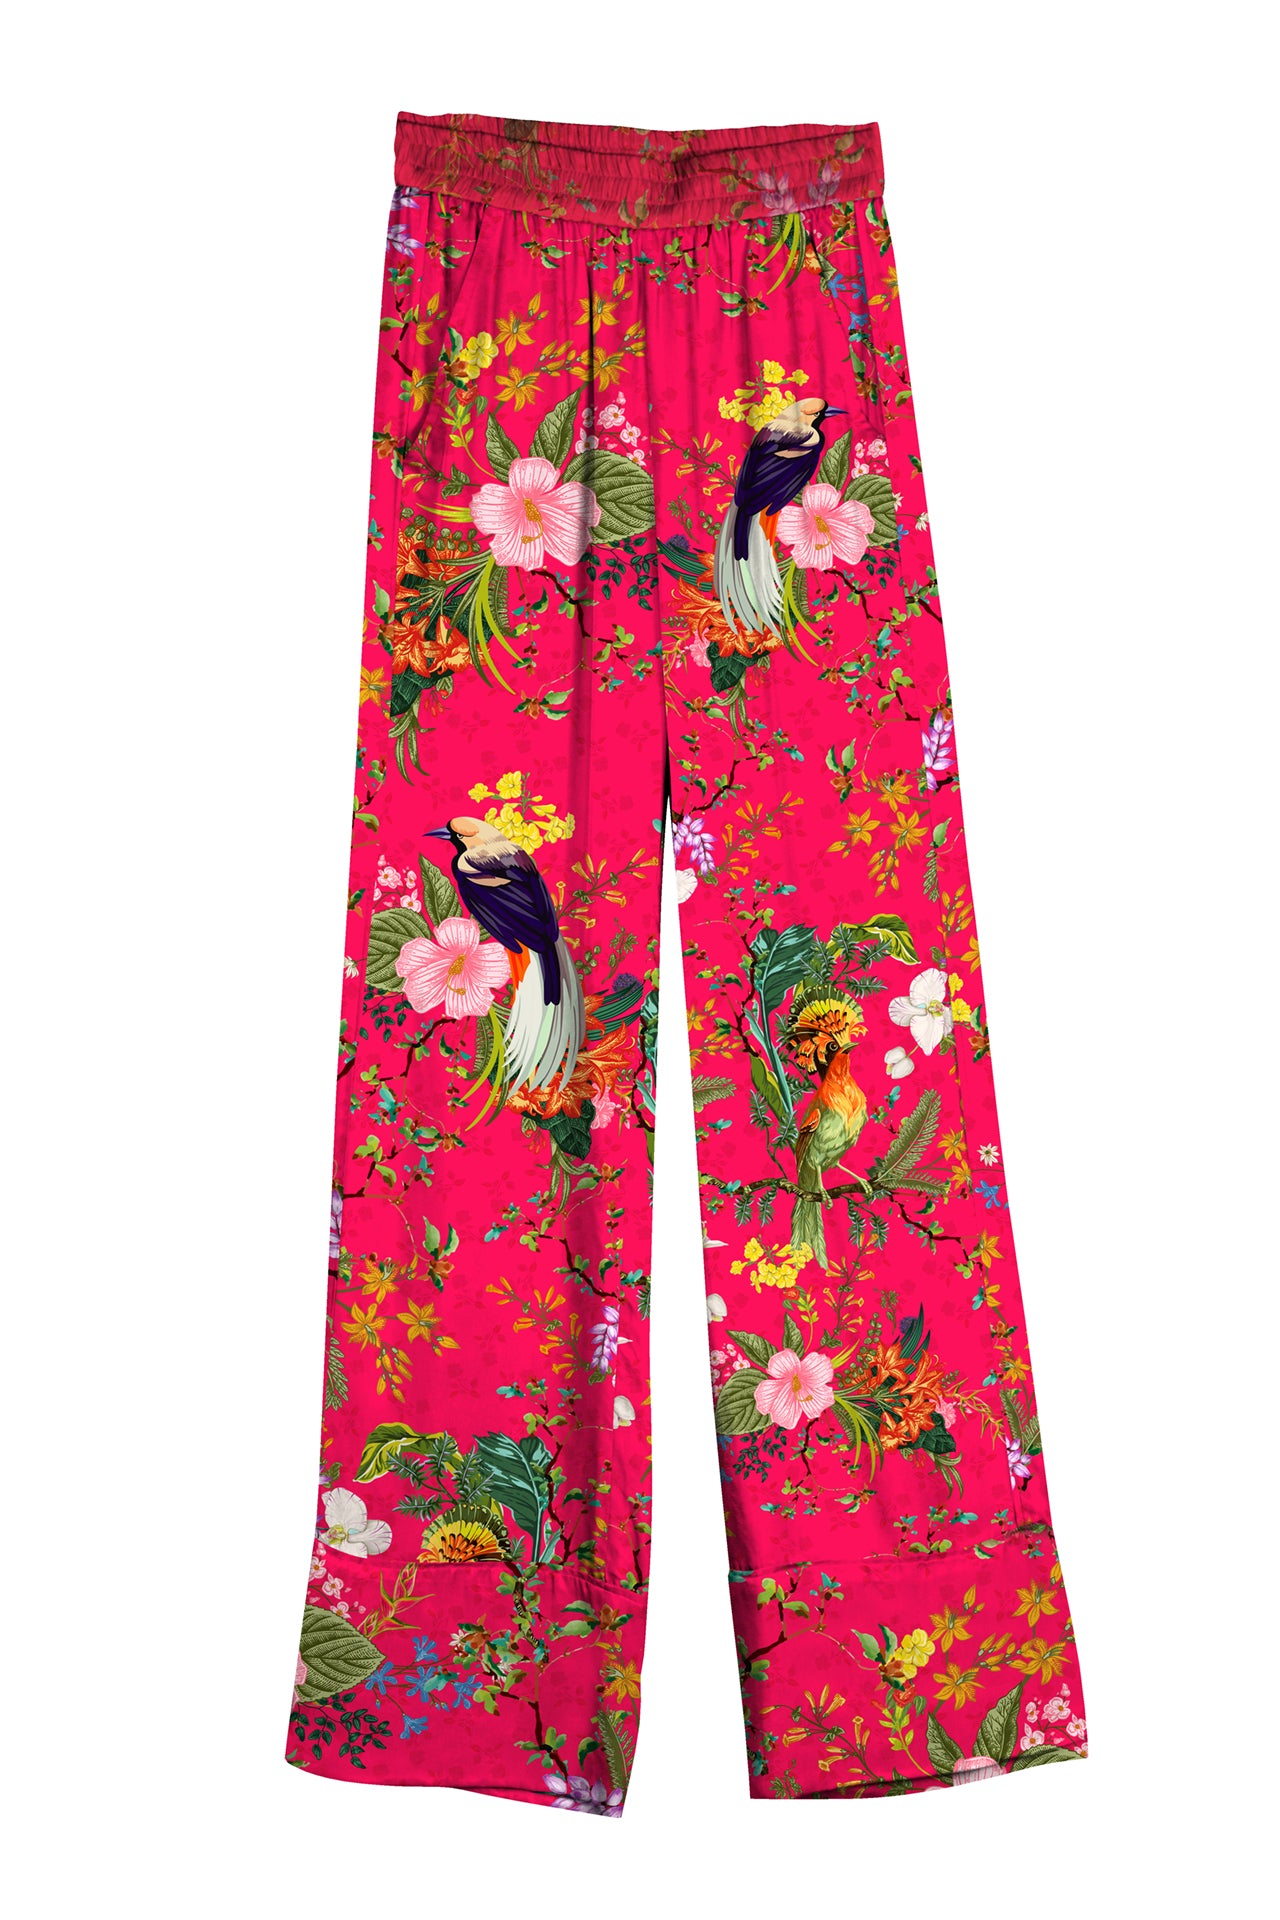 Floral-Print-Designer-Red-Pants-For-Women-By-Kyle-Richard